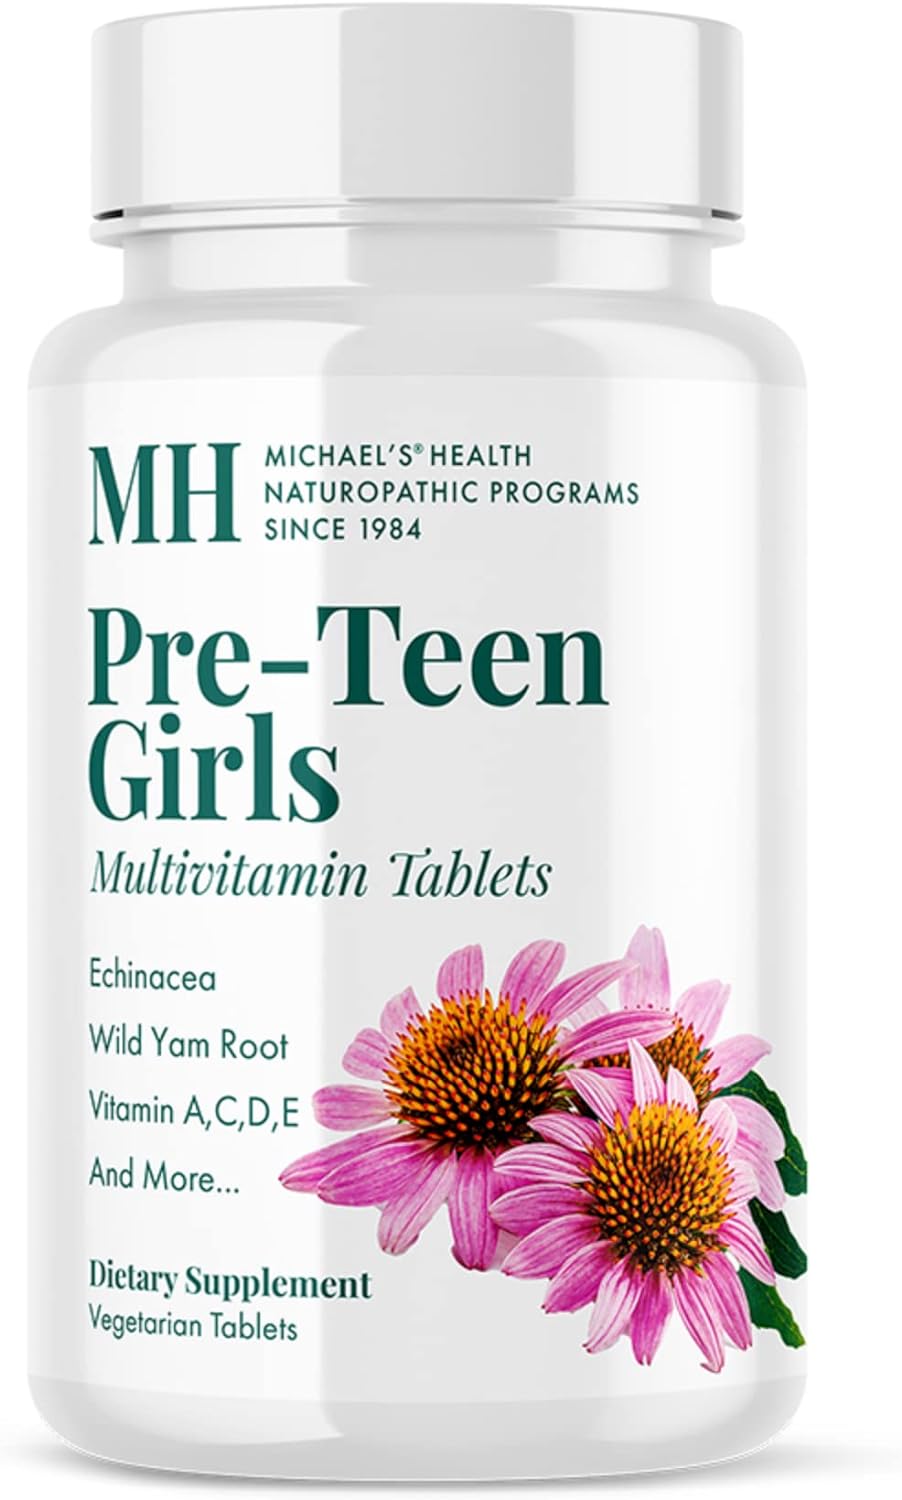 MICHAEL'S Health Naturopathic Programs Pre-Teen Girls - 60 Vegetarian